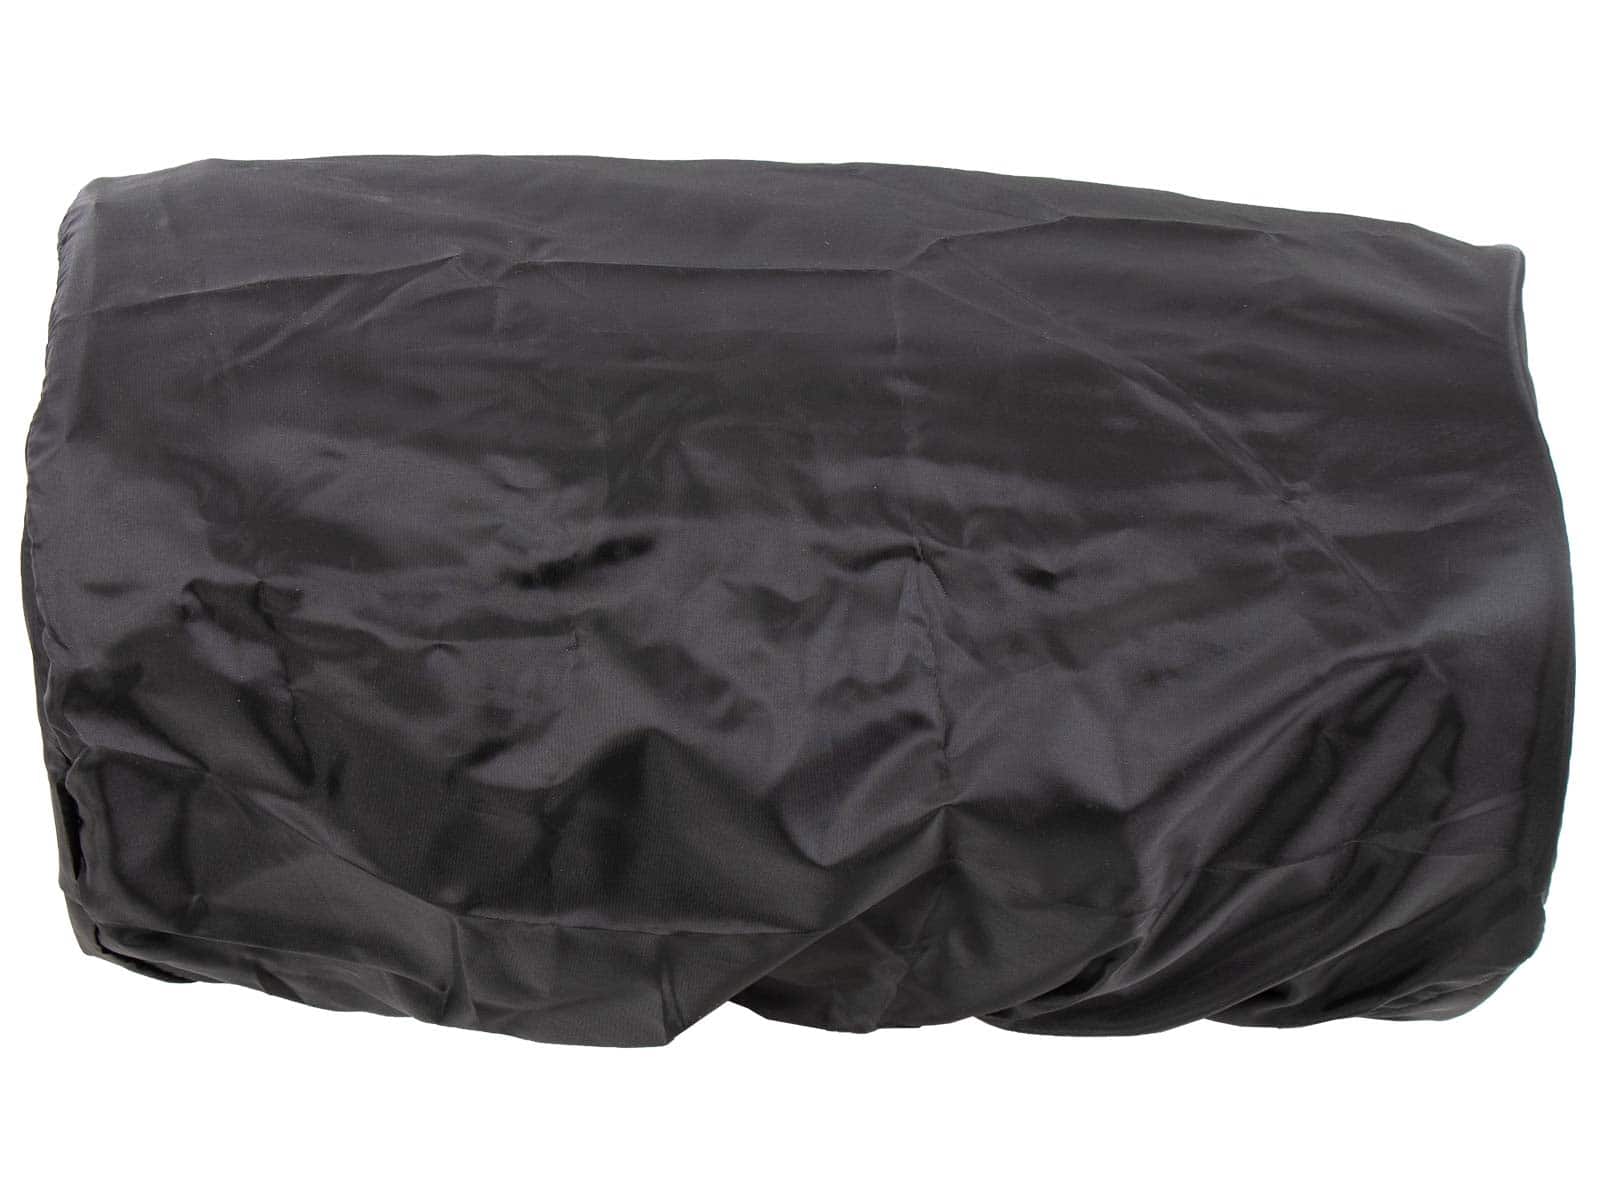 Rain cover (1 piece) for Legacy rear bag